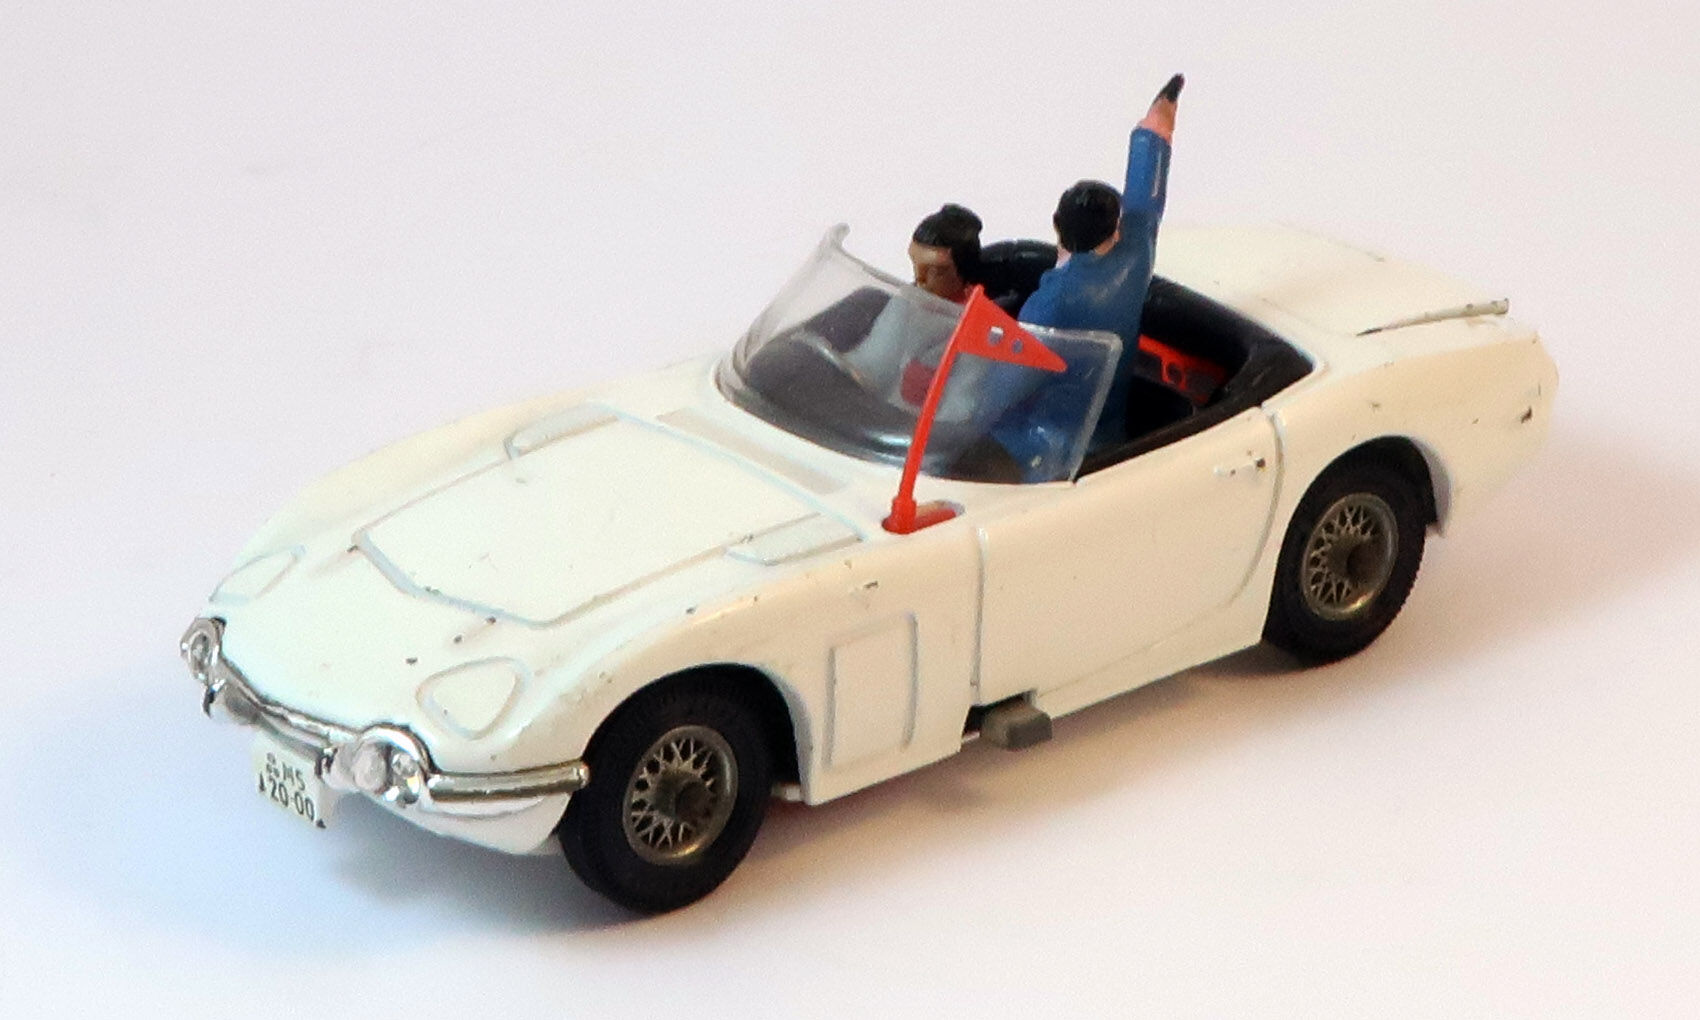 James Bond Toyota 2000 GT CORGI Toys 1966